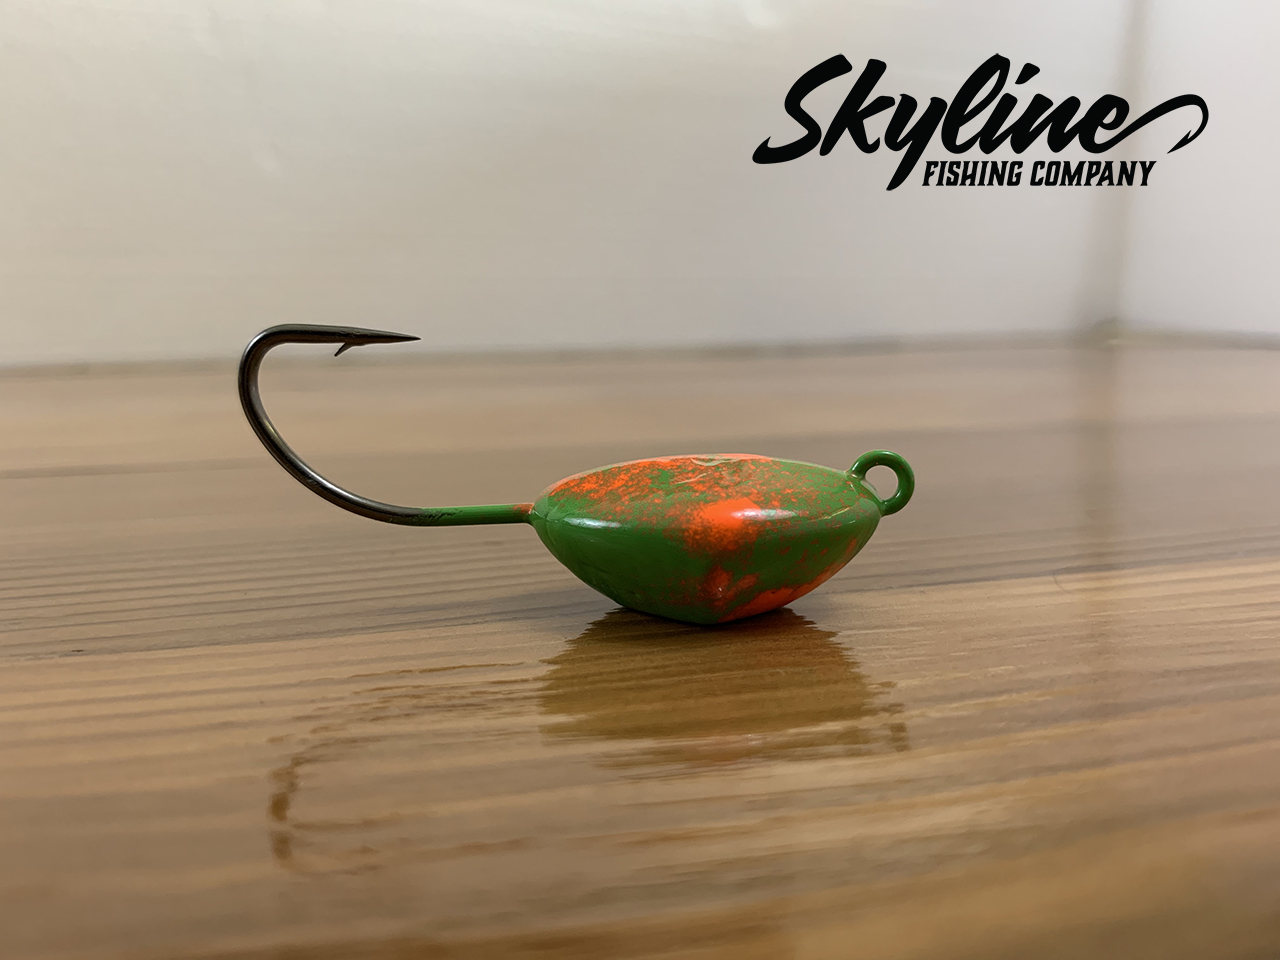 Skyline Beast Blackfish Tog Jigs - Skyline Fishing Company